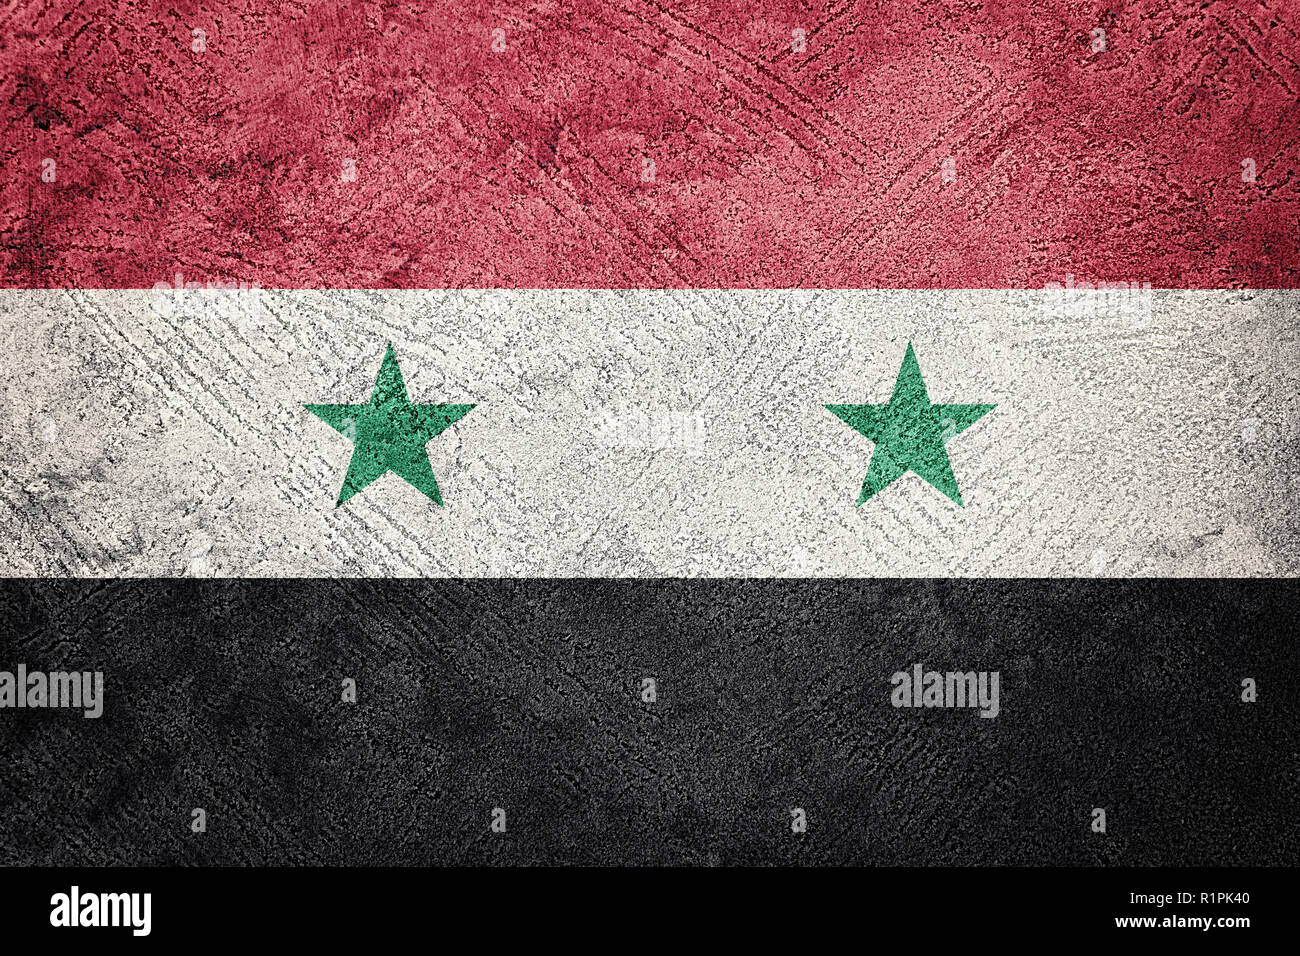 Grunge Syria flag. Syrian flag with grunge texture. Stock Photo